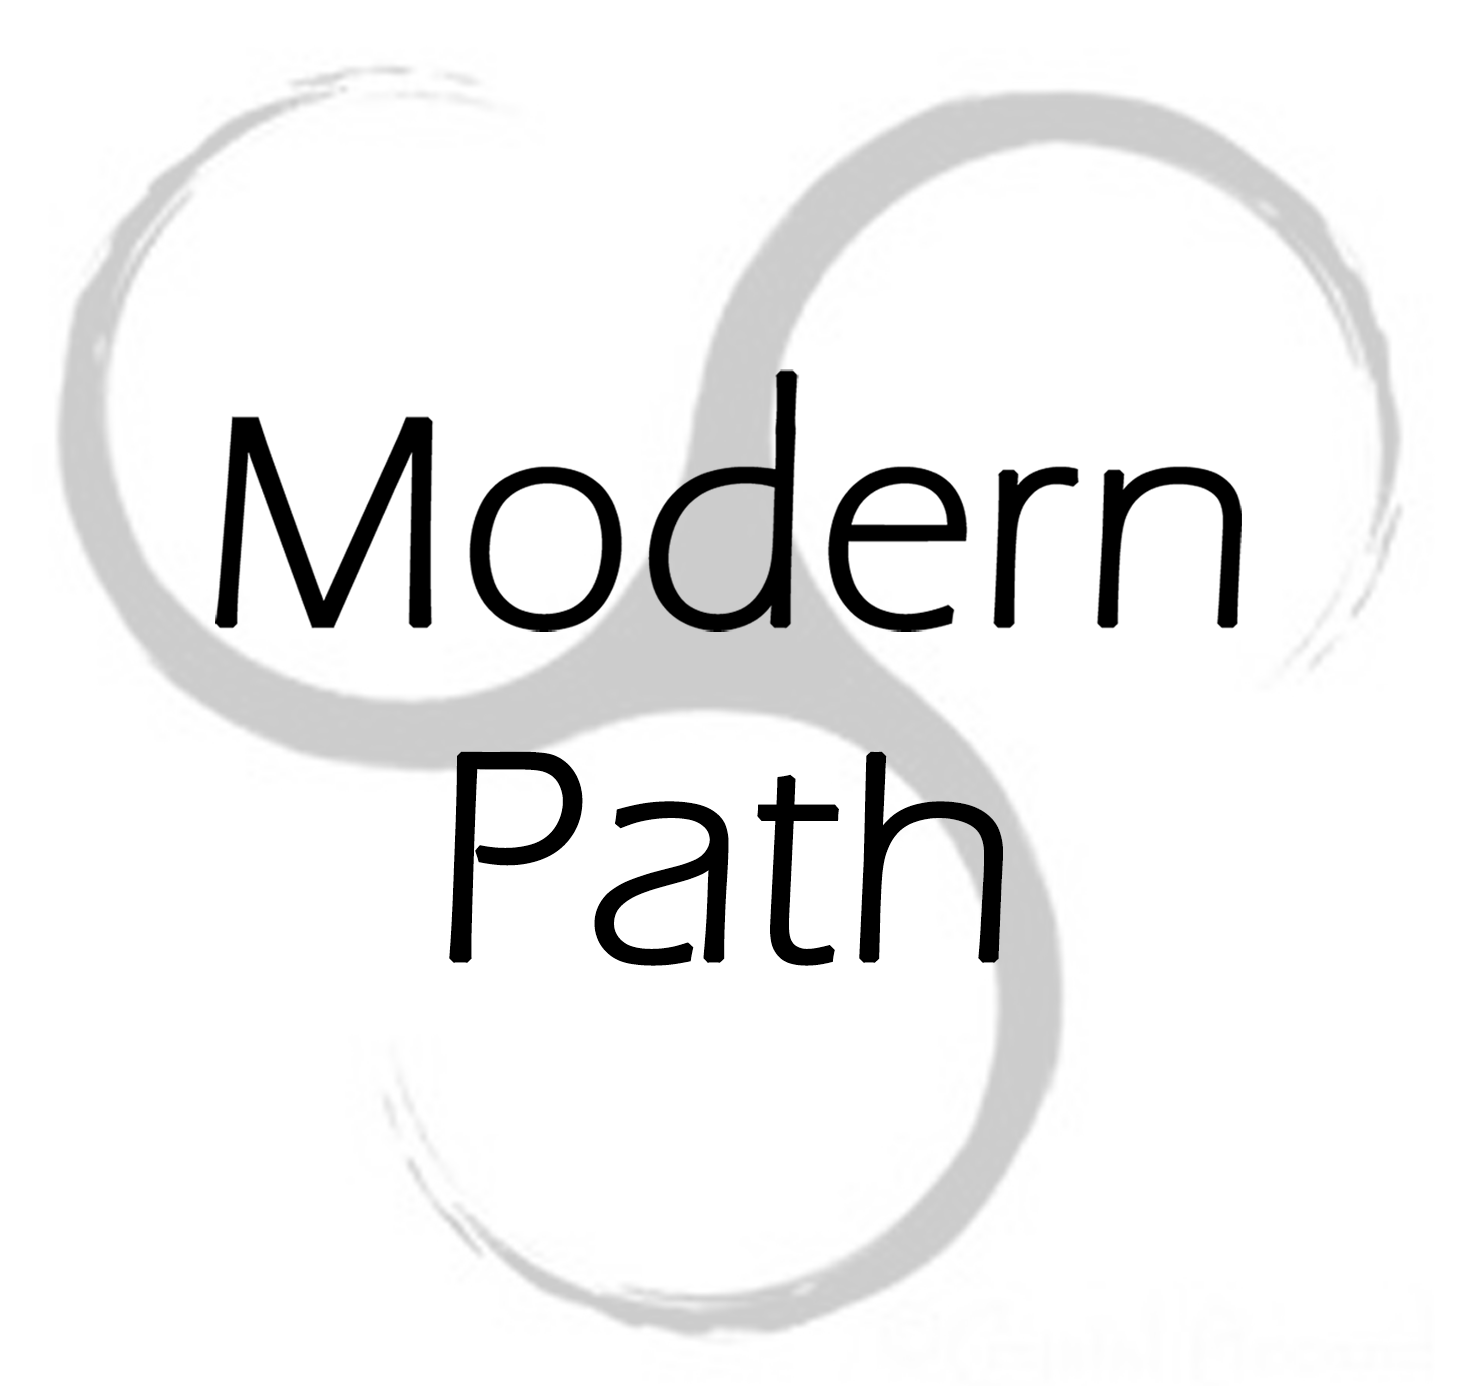 Modern Path